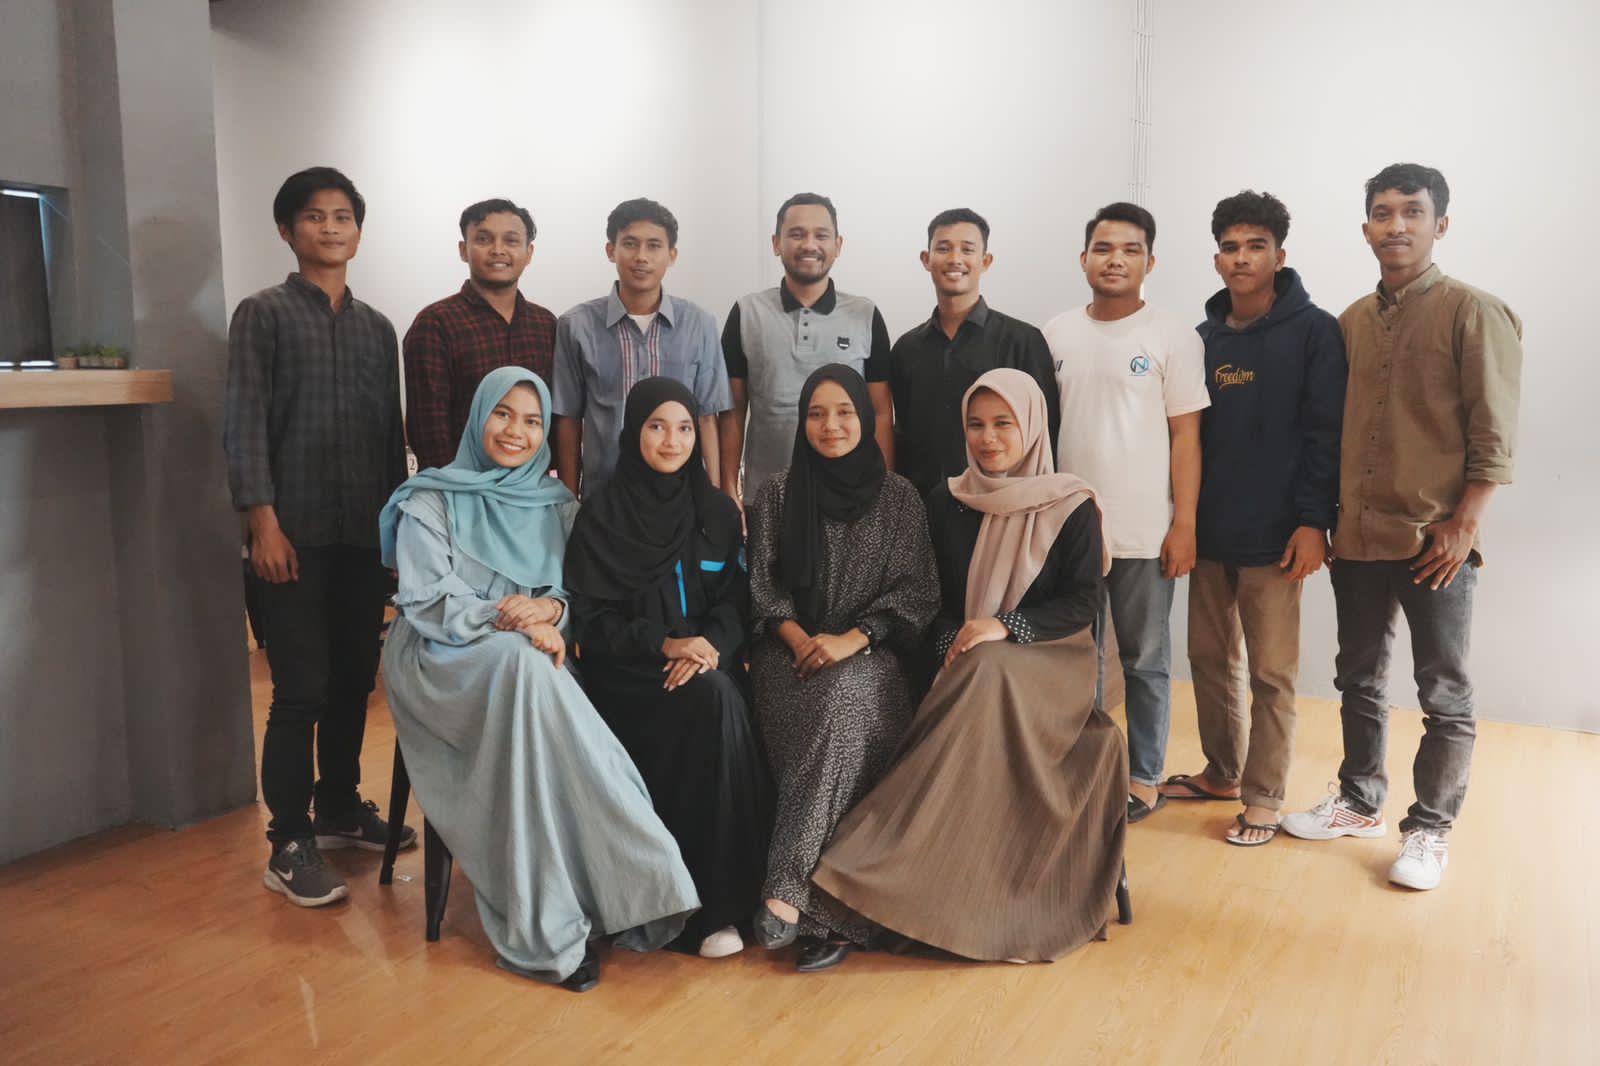 Ketua Himpunan Pengusaha Muda Indonesia (HIPMI) Cabang Nagan Raya bersama kader Himpunan Mahasiswa Islam (HMI) Cabang Meulaboh